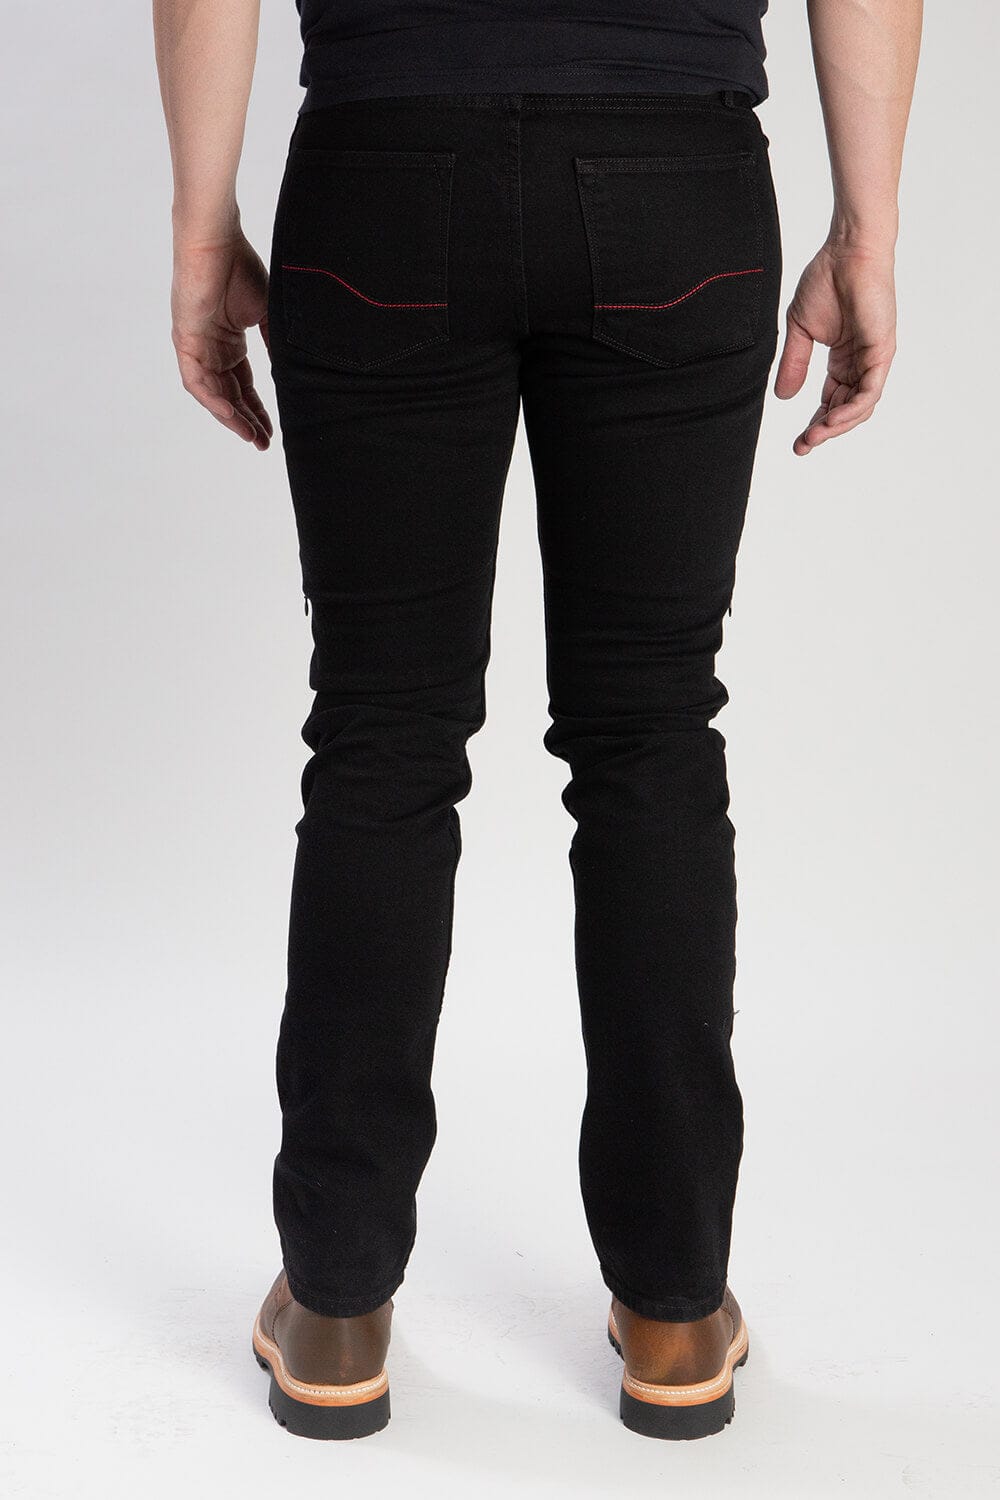 Jeans Buttons - Design (Button & Nail) - B. Black & Sons Fabrics